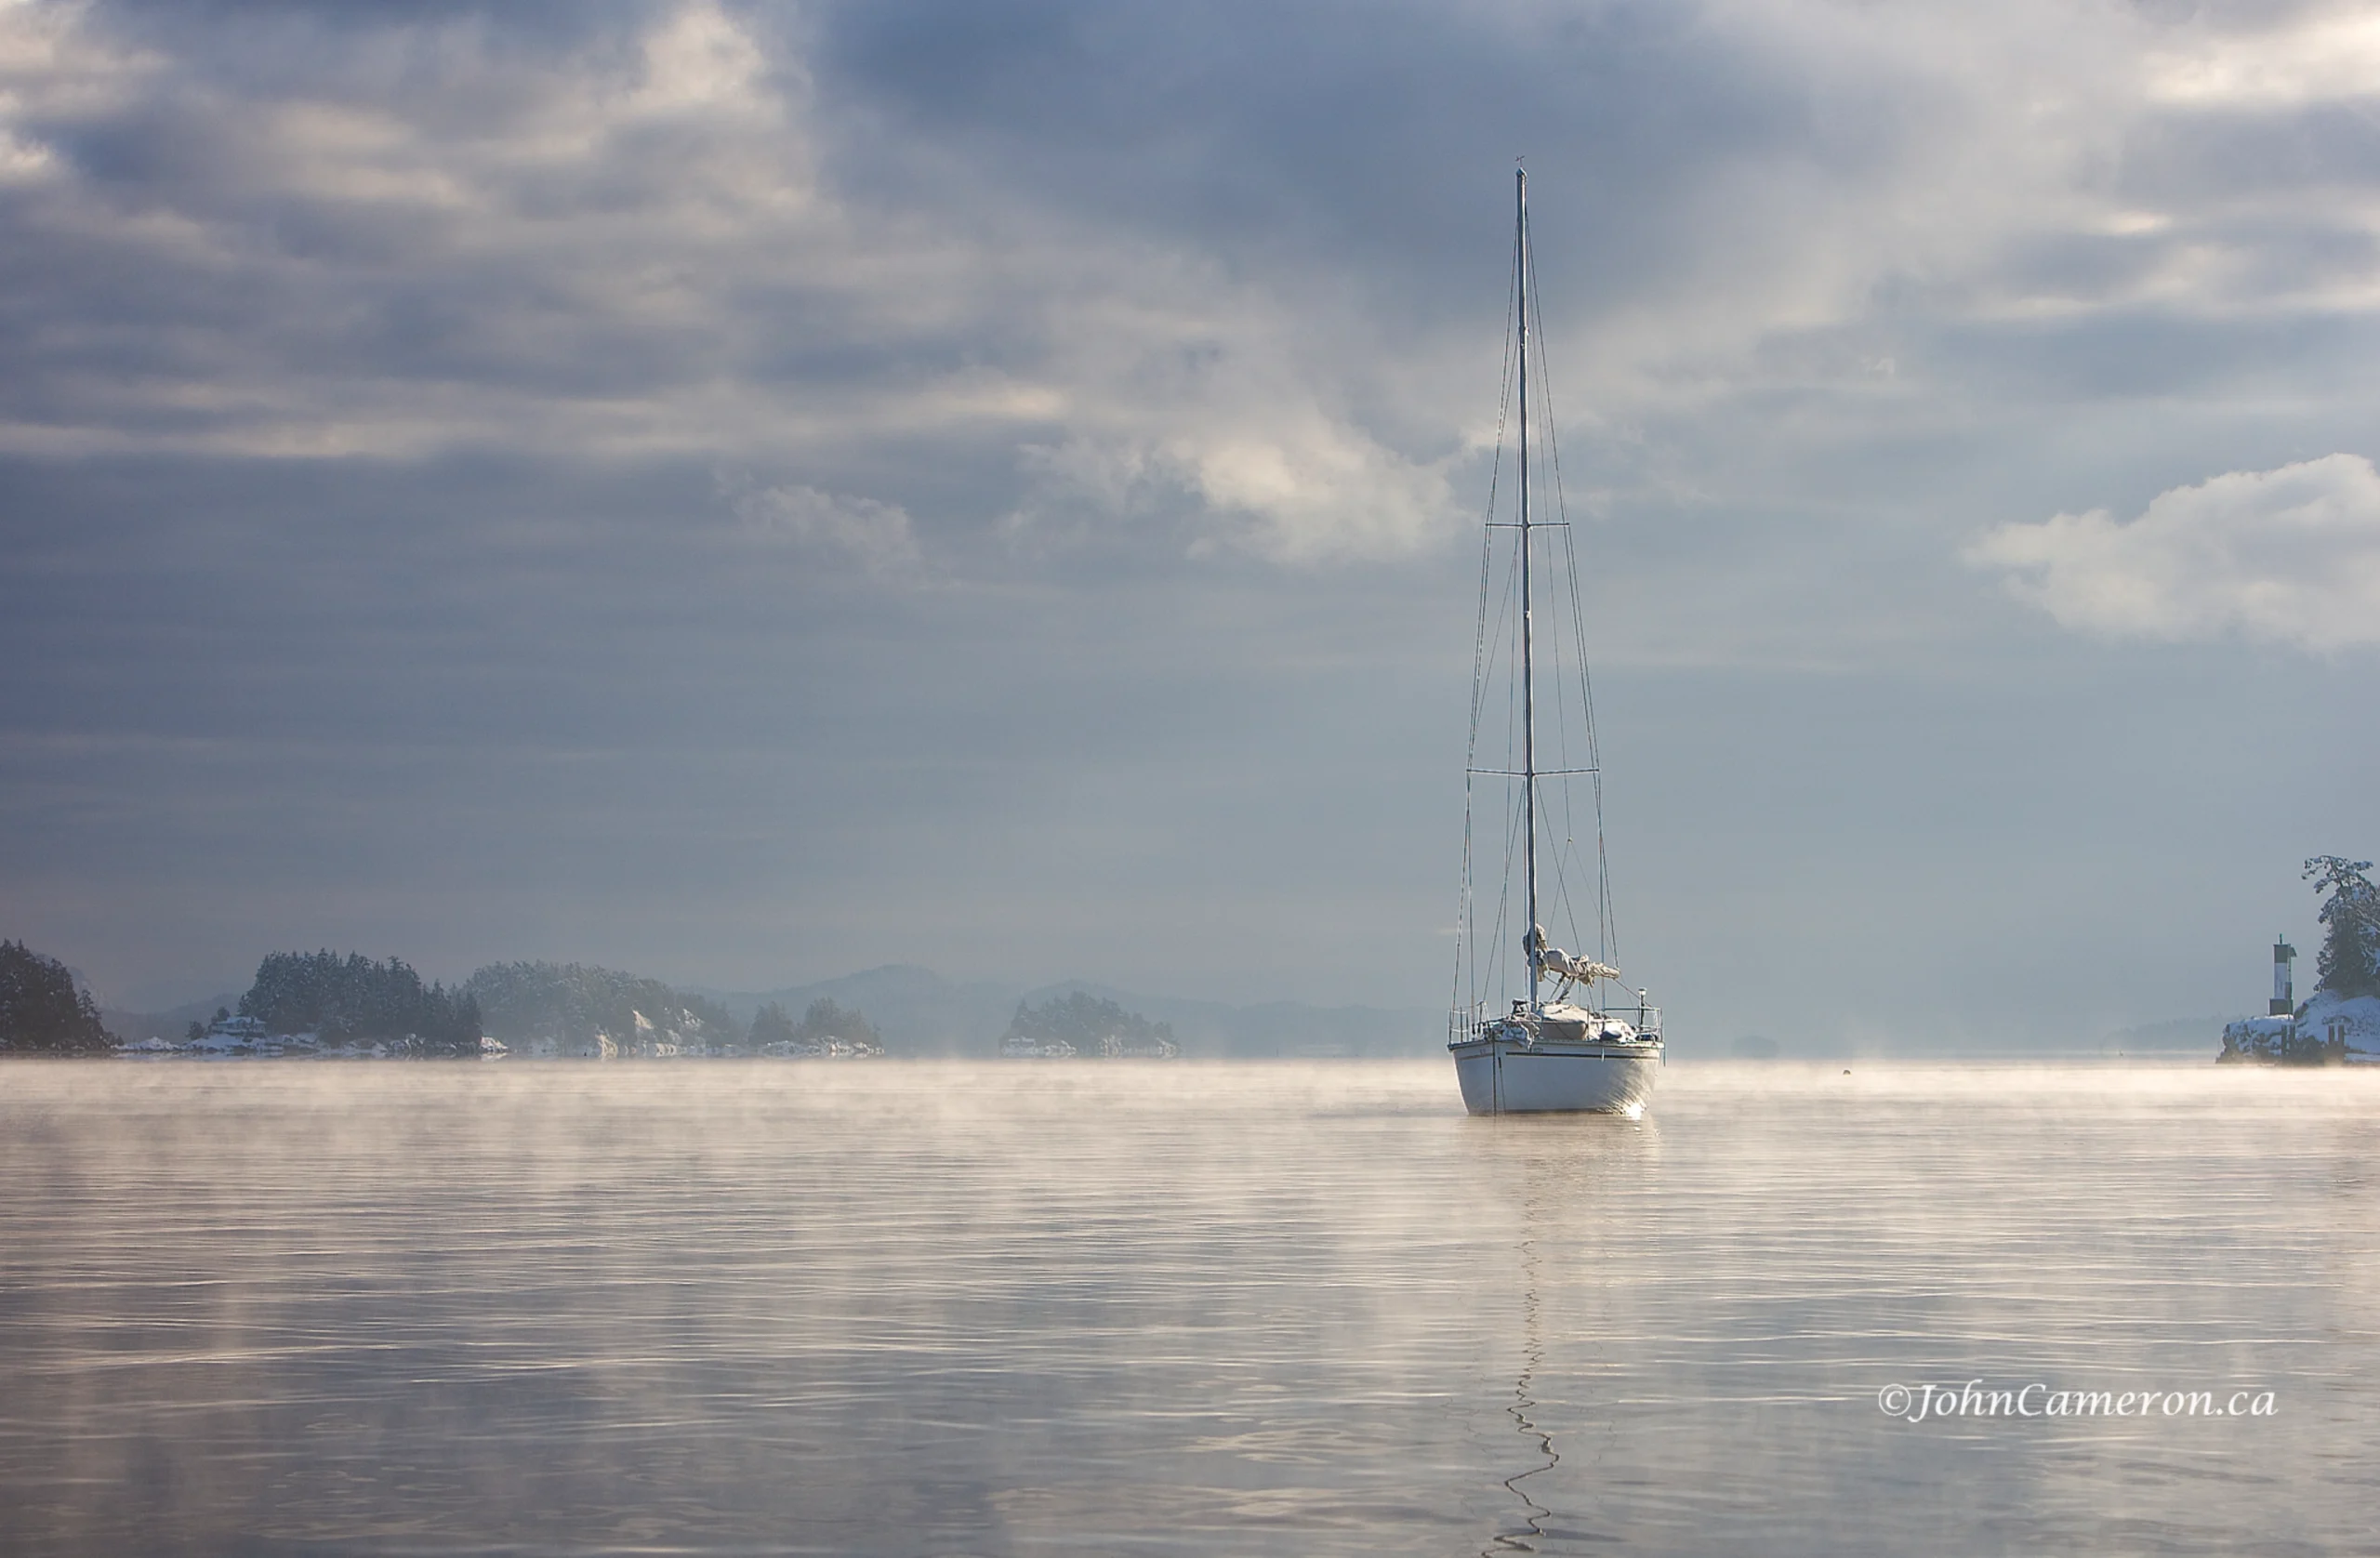 Winter sail with ice fog ©johncameron.ca